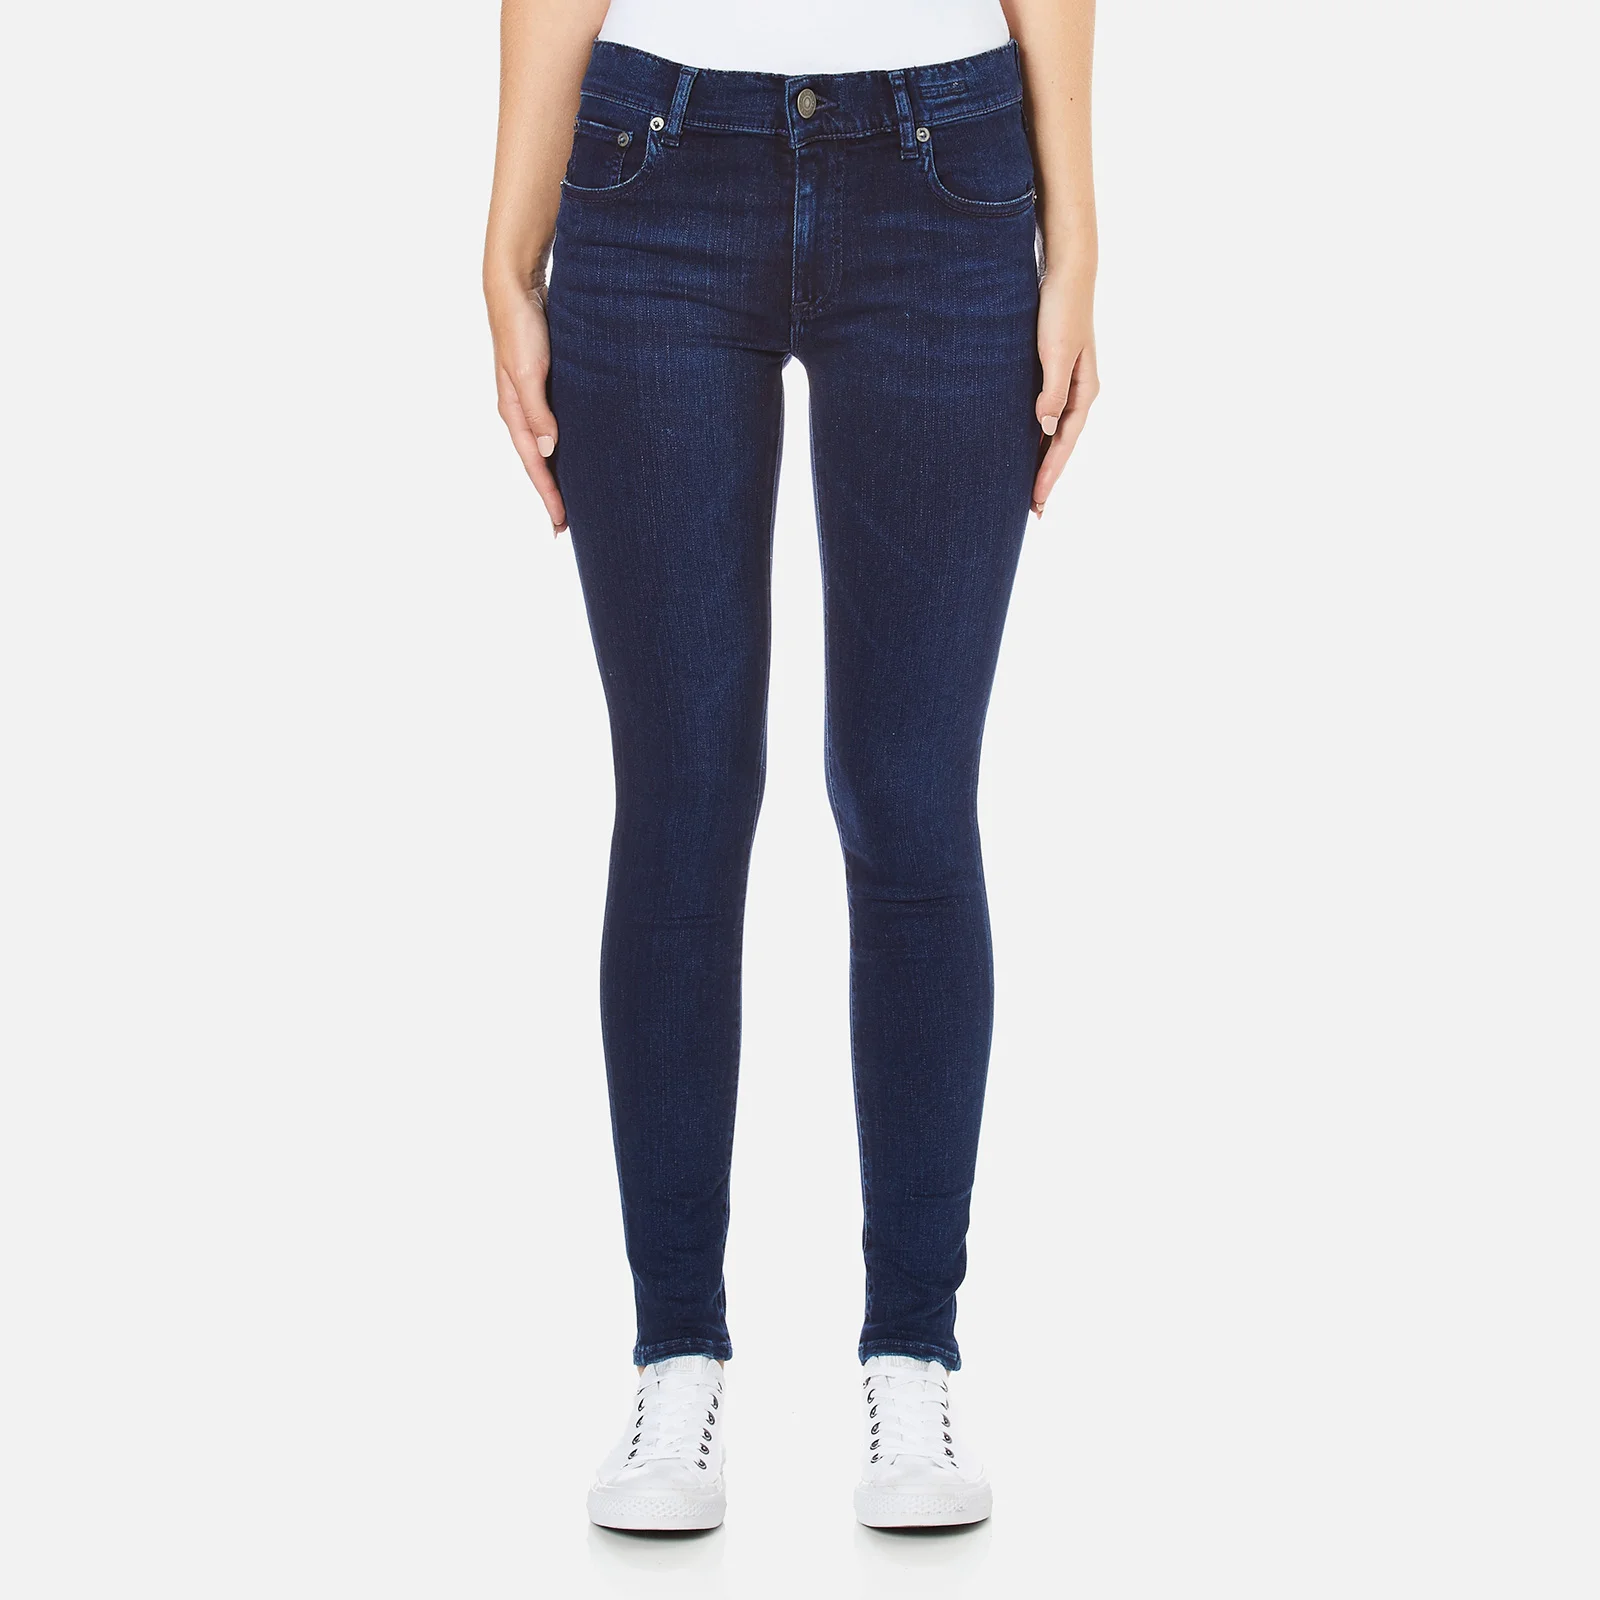 Polo Ralph Lauren Women's Varick Skinny Jeans - Dark Indigo Image 1